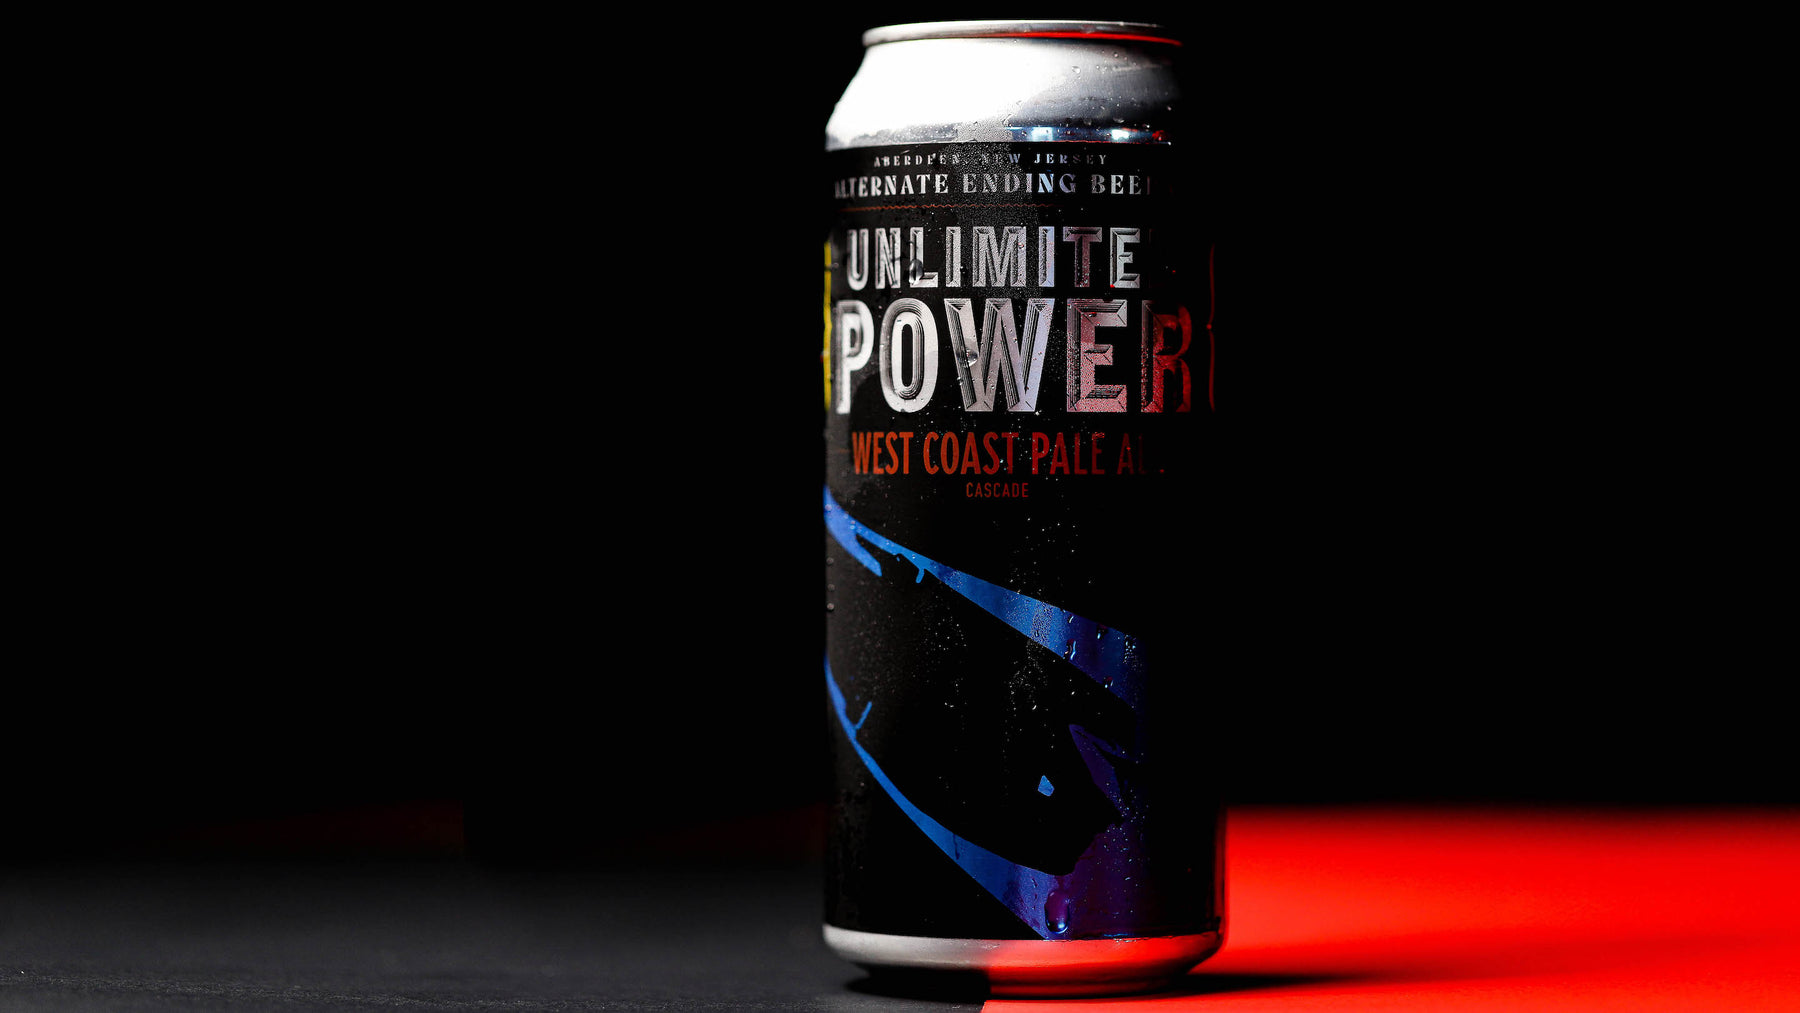 Alternate Ending Beer Co. West Coast Pale Ale 5.6% Cascade hop Unlimited Power